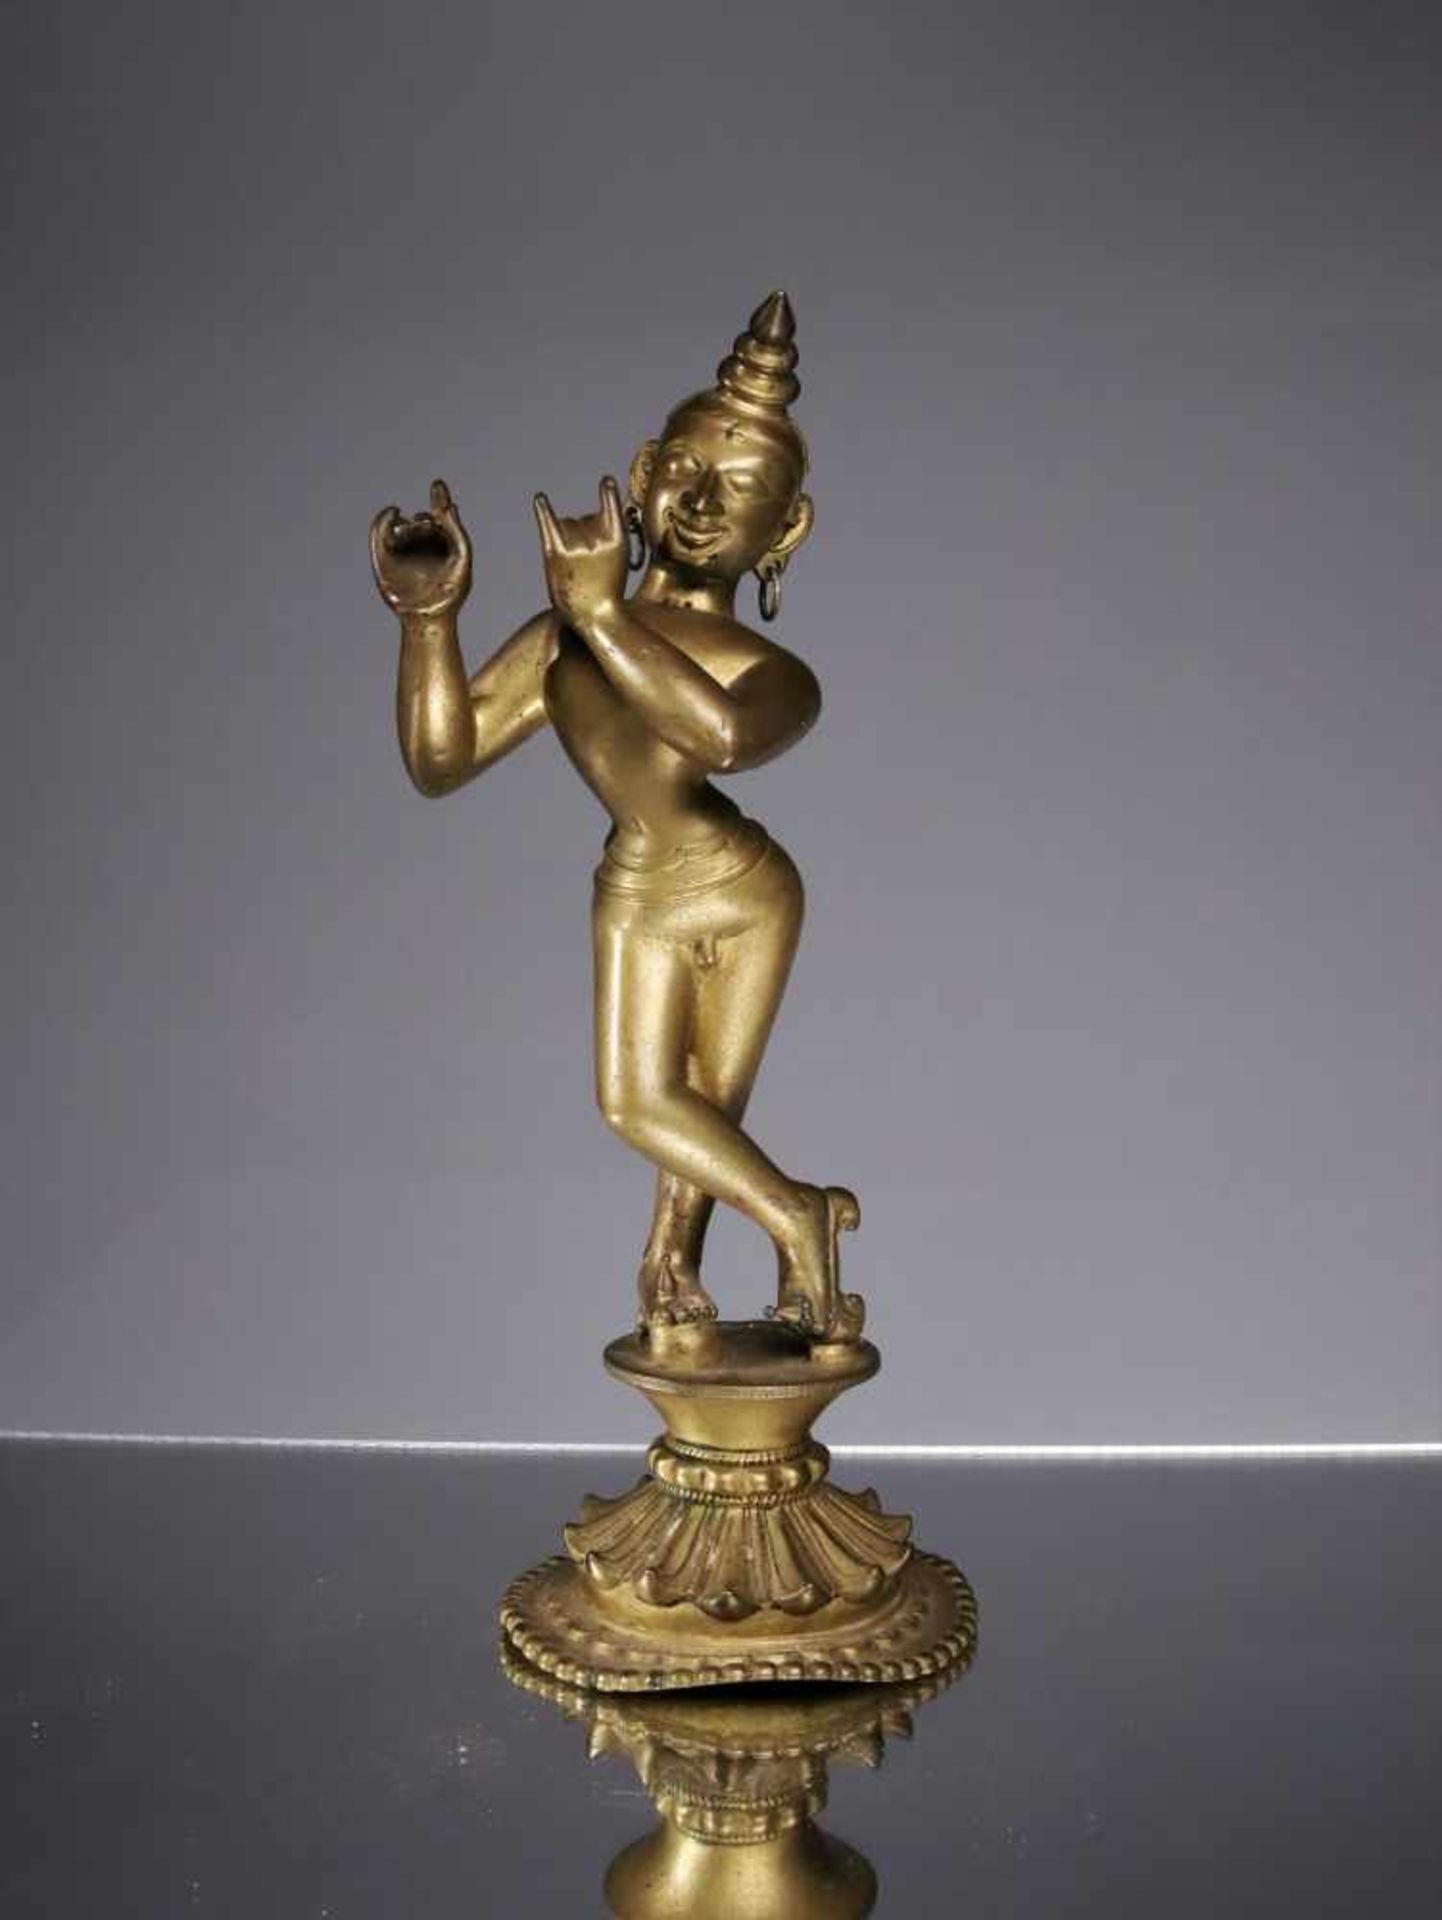 KRISHNABronzeIndia , 16th centuryDimensions: Height 27 cm ; Wide 10 cm ; Depth 10 cmWeight: 1882